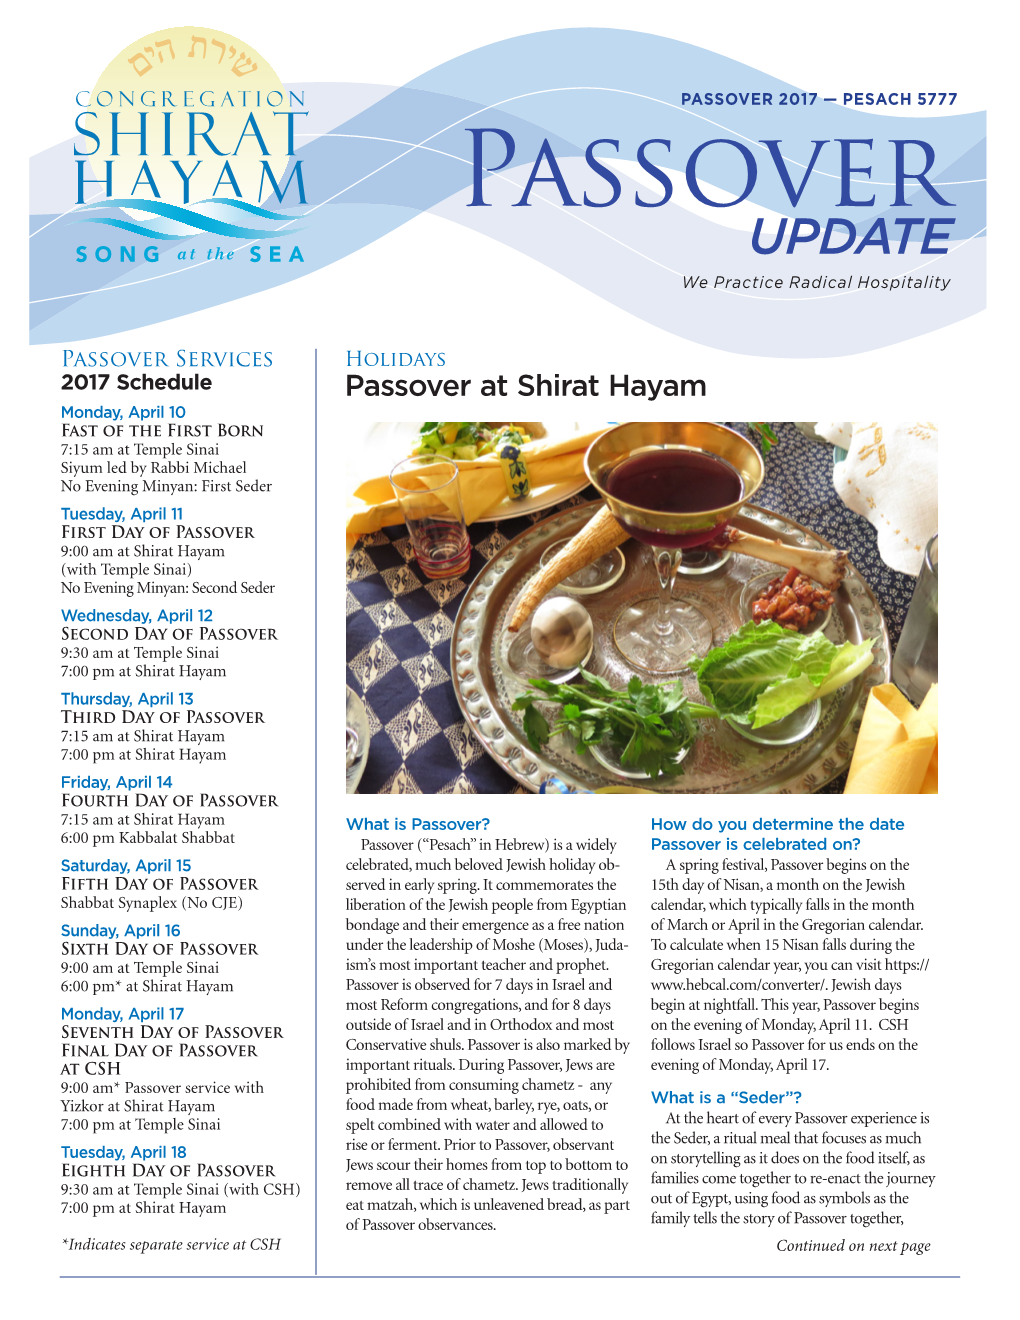 Passover Update 2017